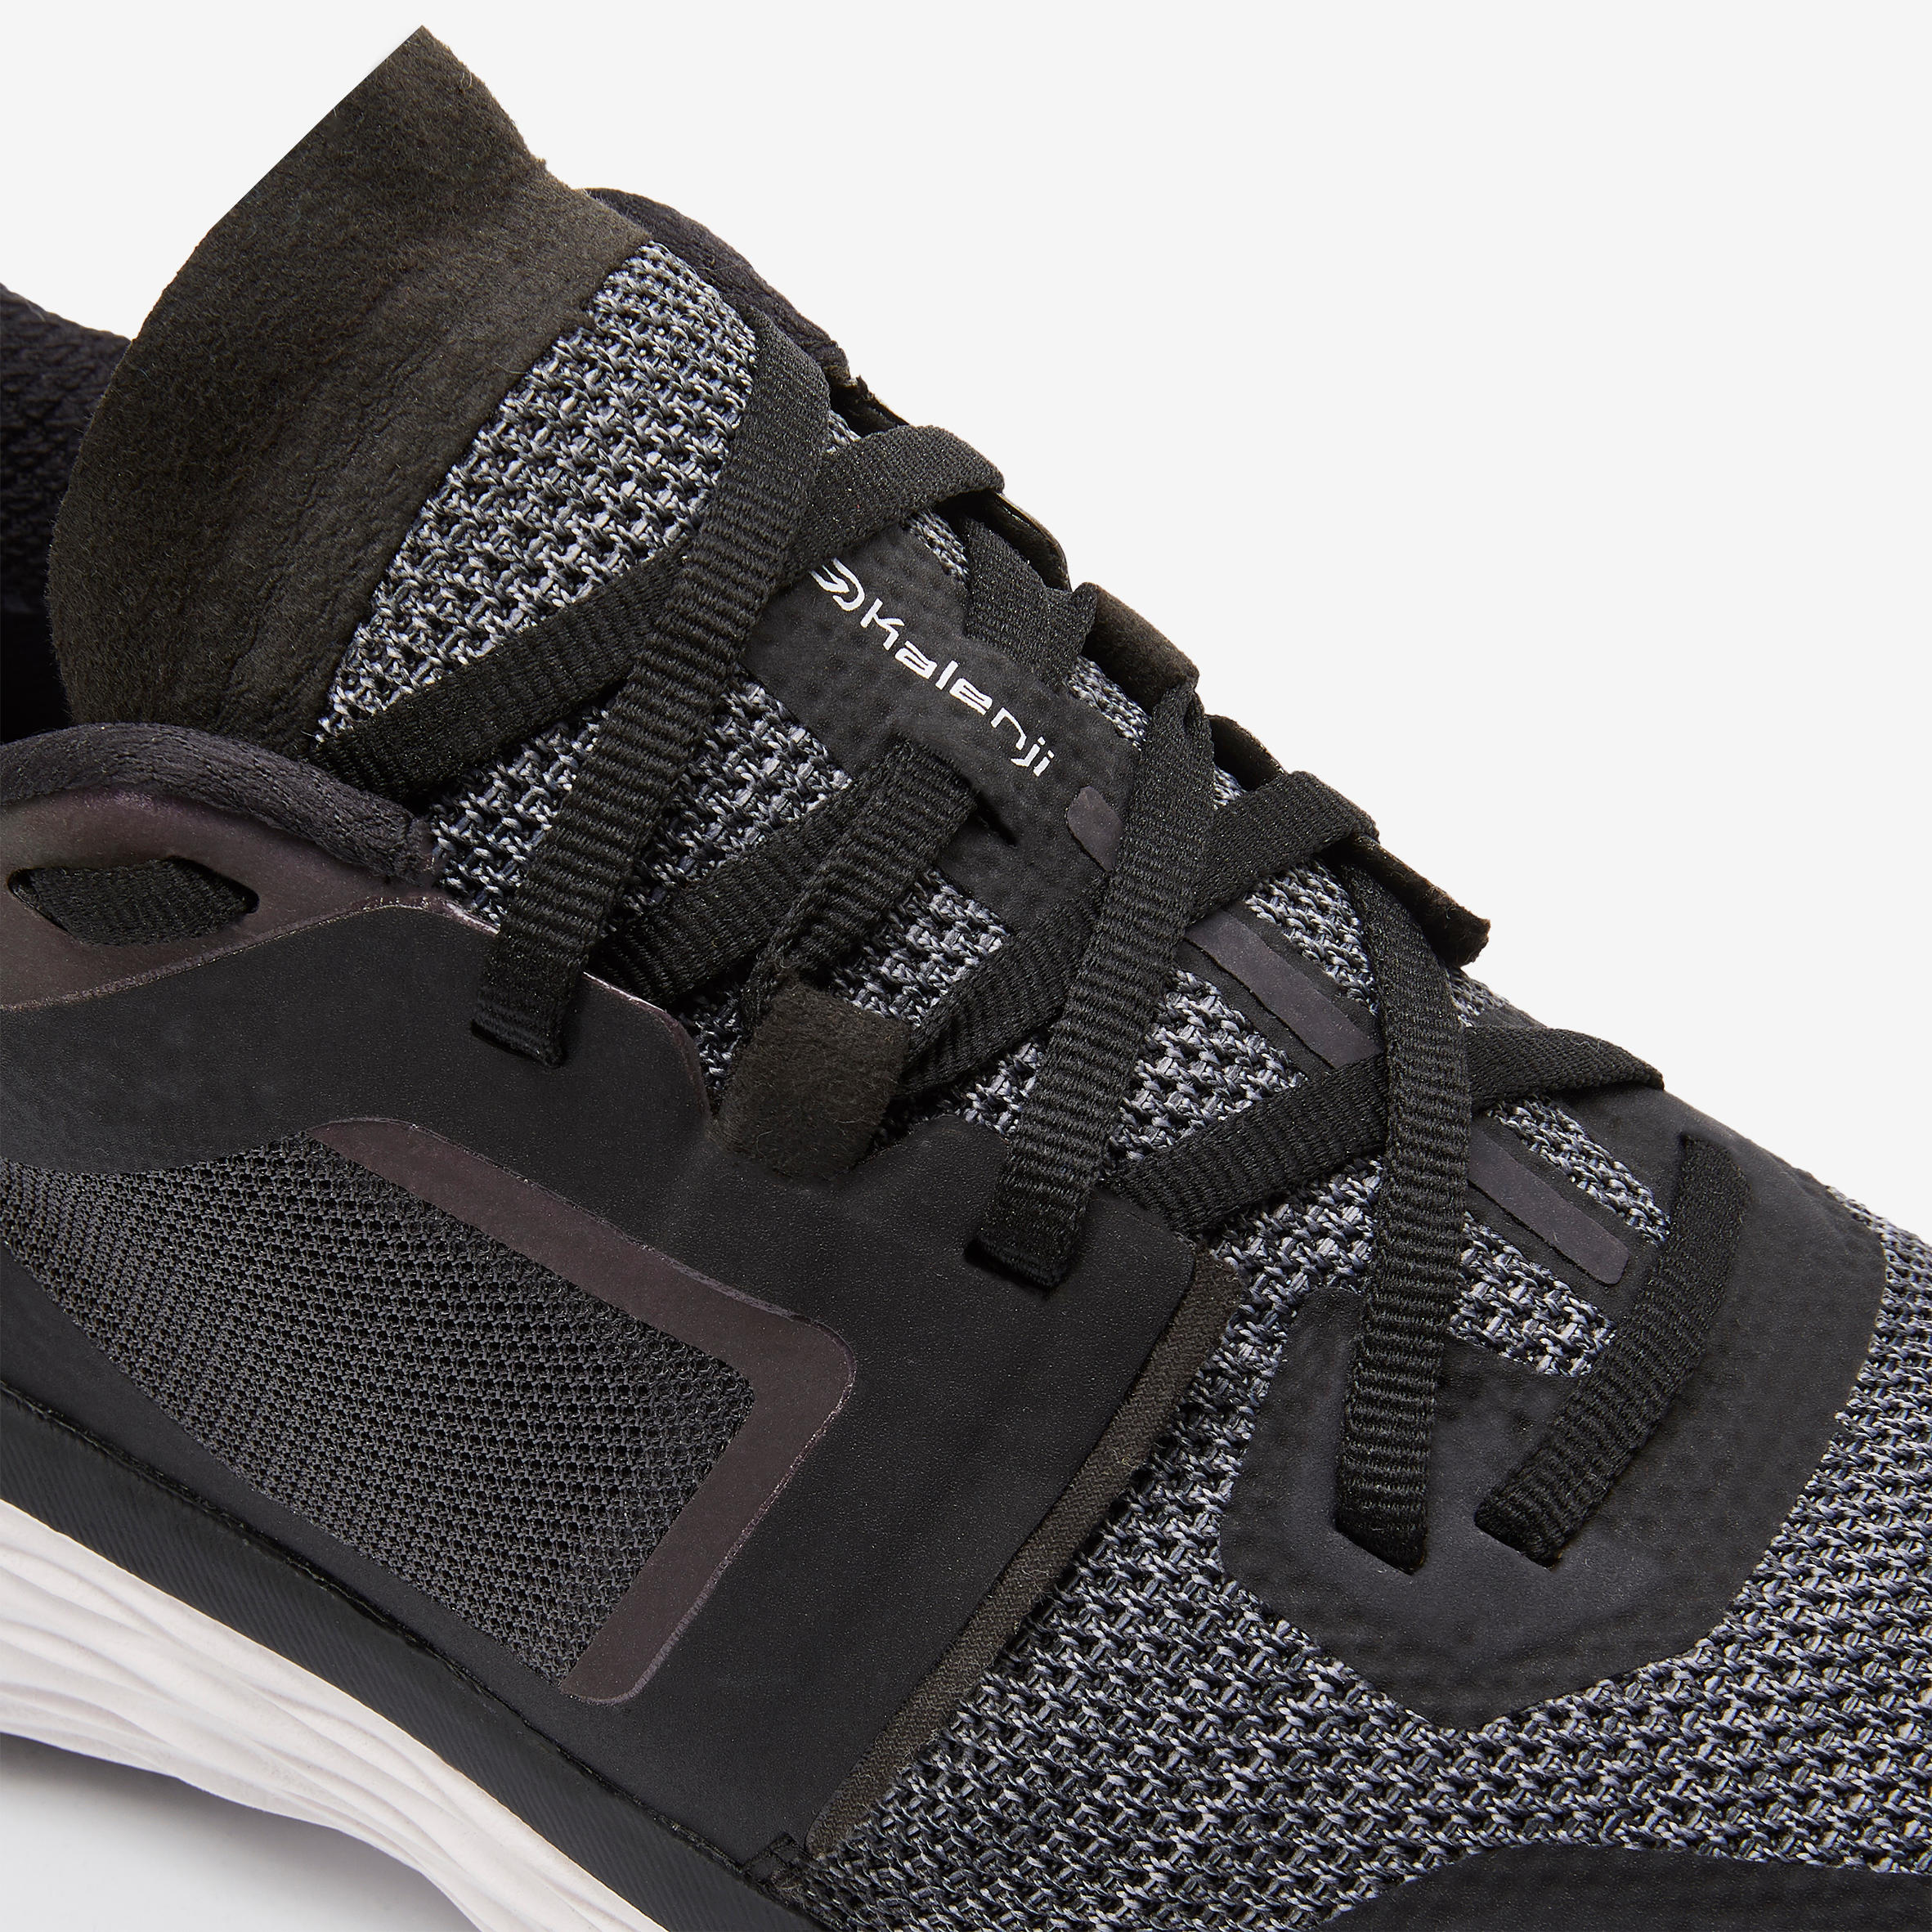 Kalenji Mens Black Run Comfort Running Shoes, Size: 8.5 at Rs 3499